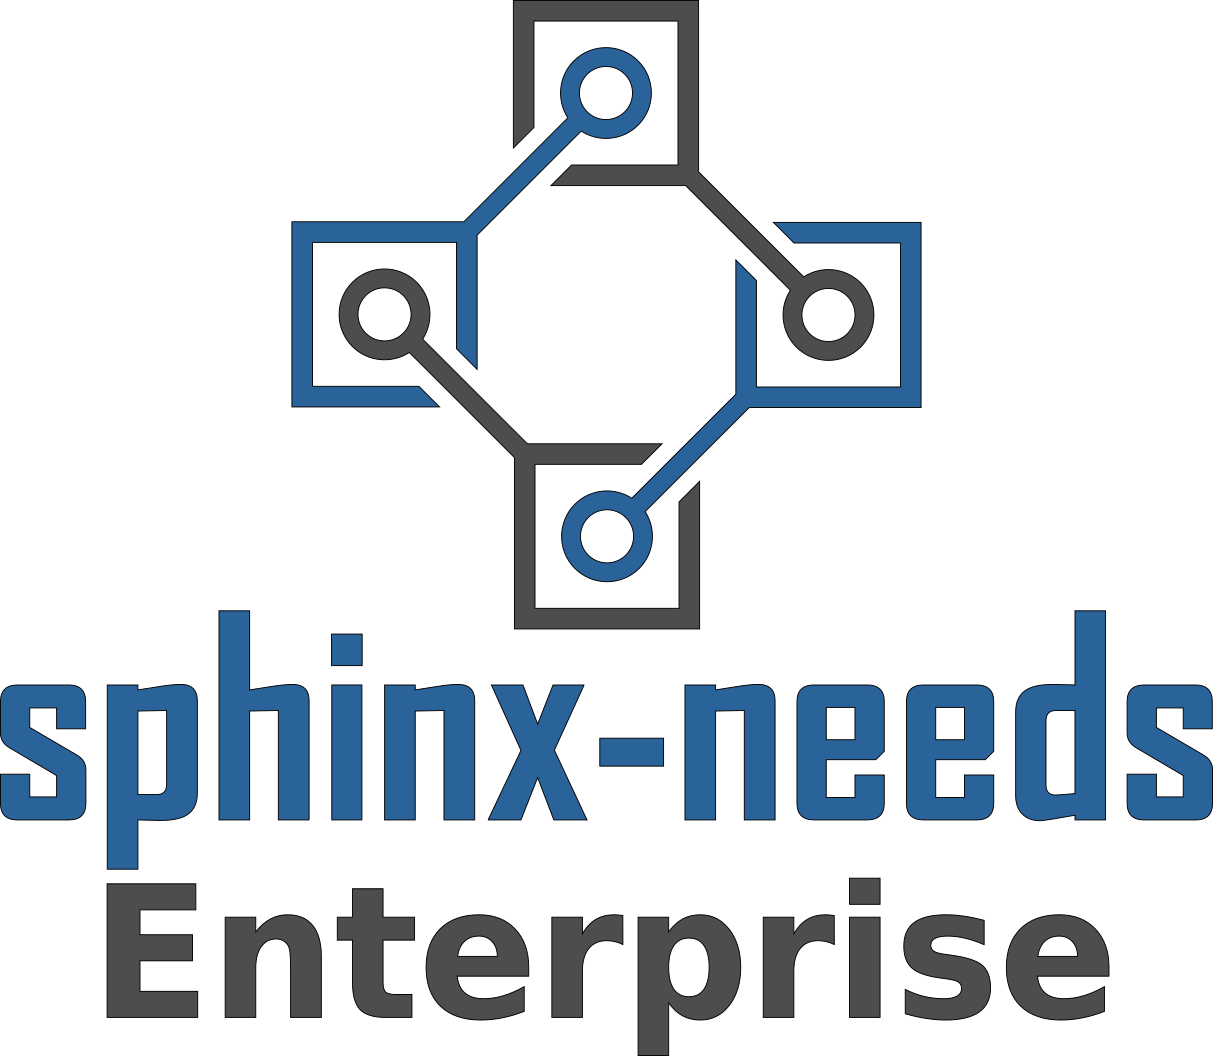 _images/sphinx-needs-enterprise.png